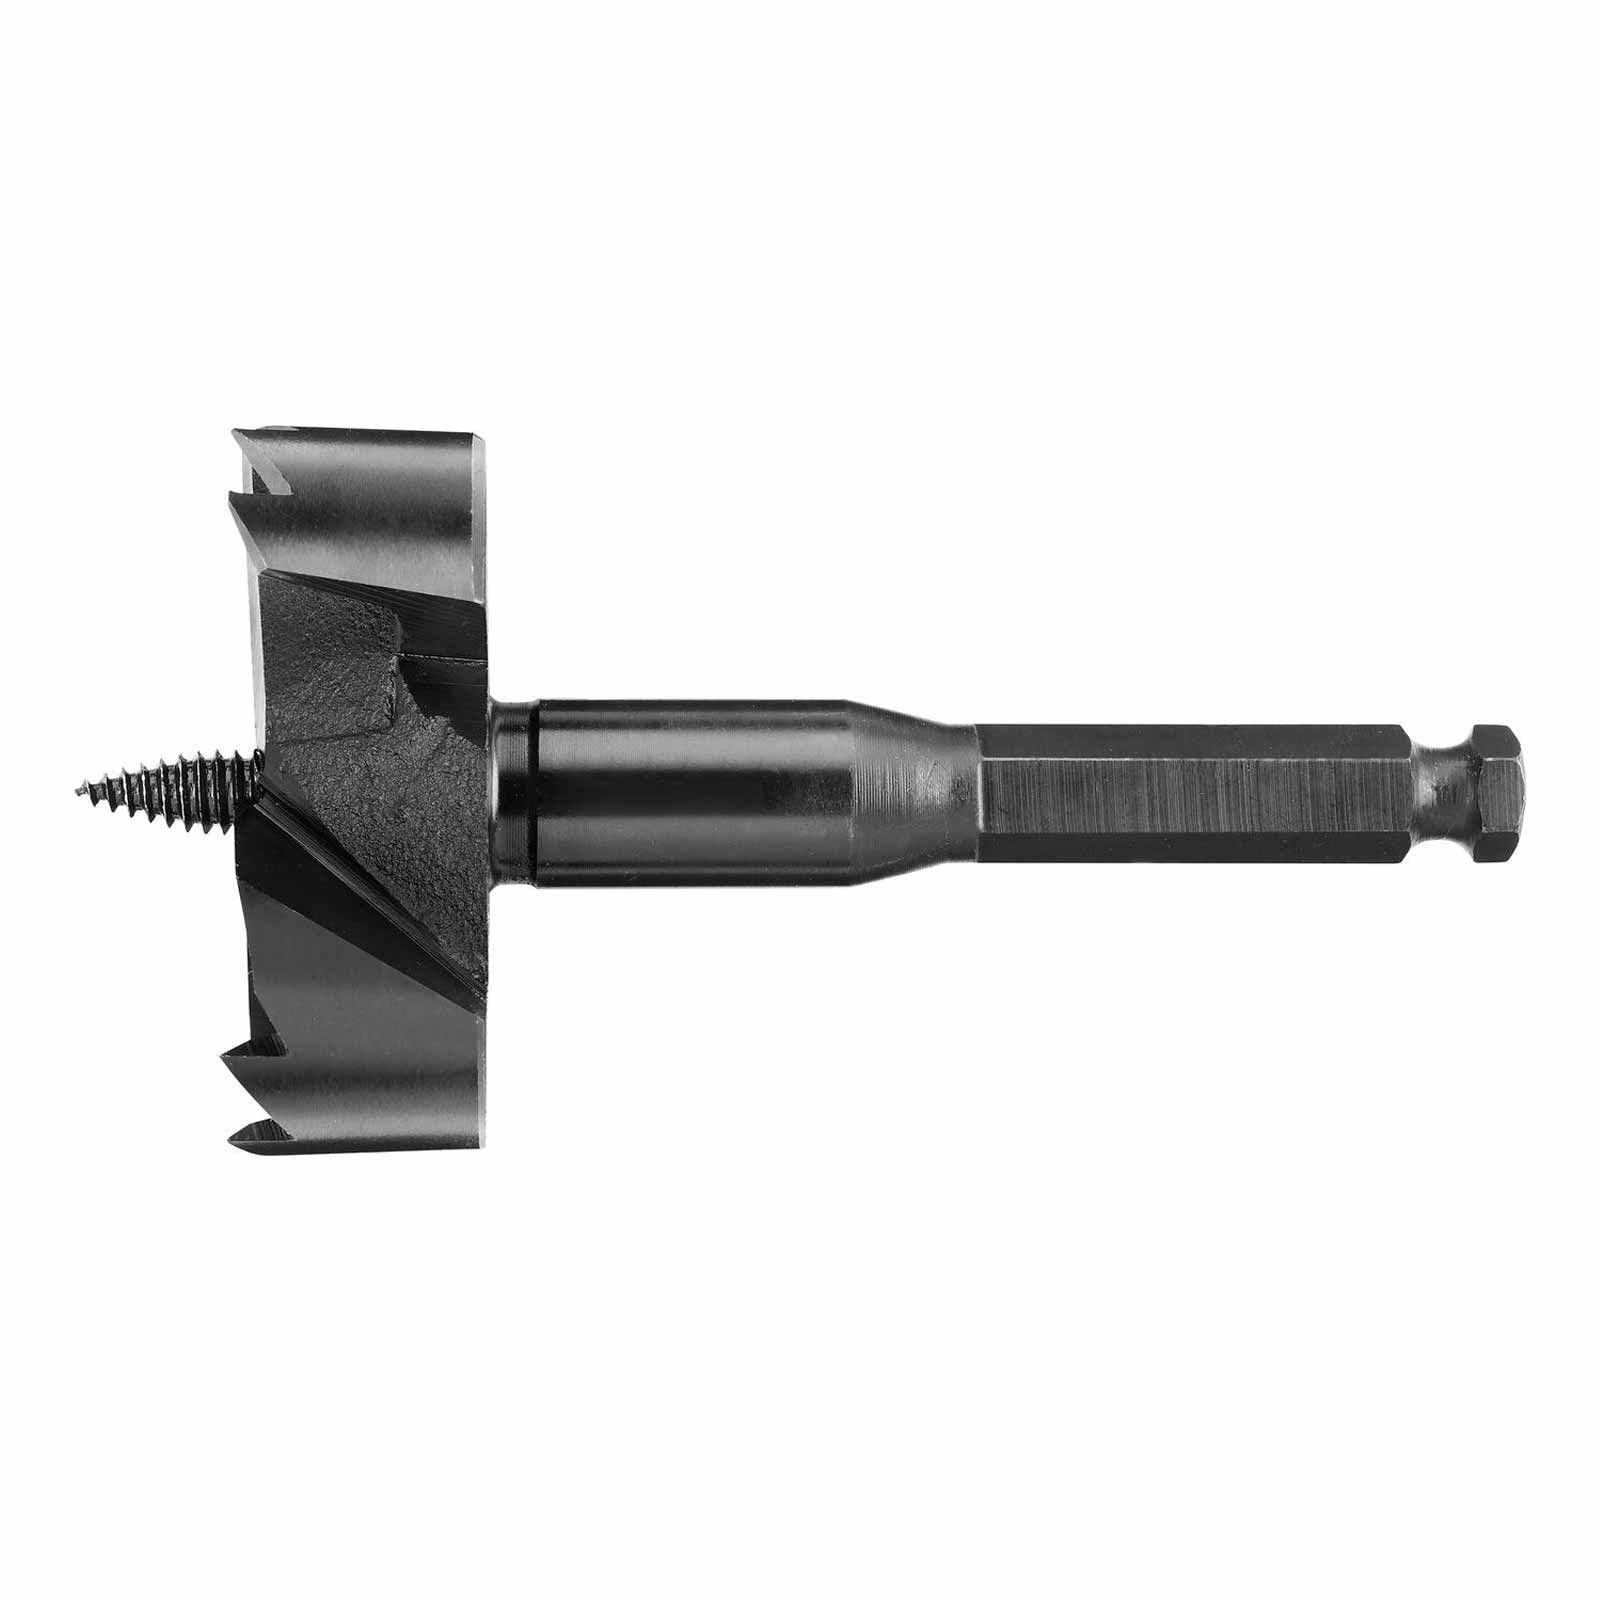 DeWALT Rapid-Holzbohrer, Forstnerbohrer, Hart- und Weichholzbohrer - Ø25 - 117mm Abmessungen:65 mm von Dewalt